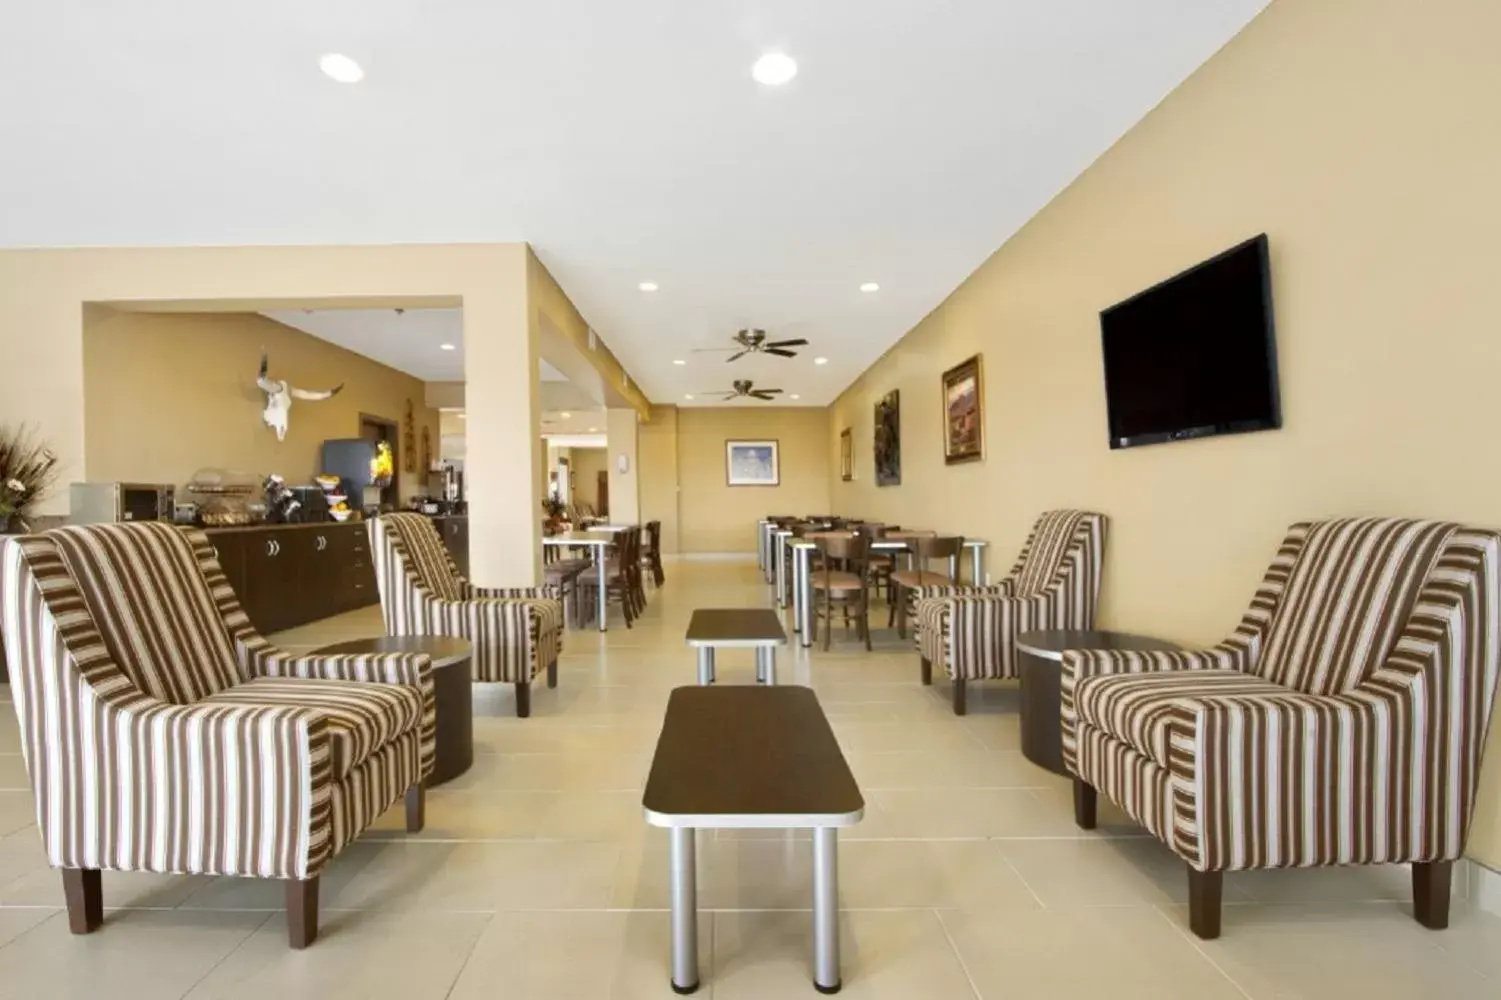 Lobby or reception in Microtel Inn & Suites by Wyndham Buda Austin South